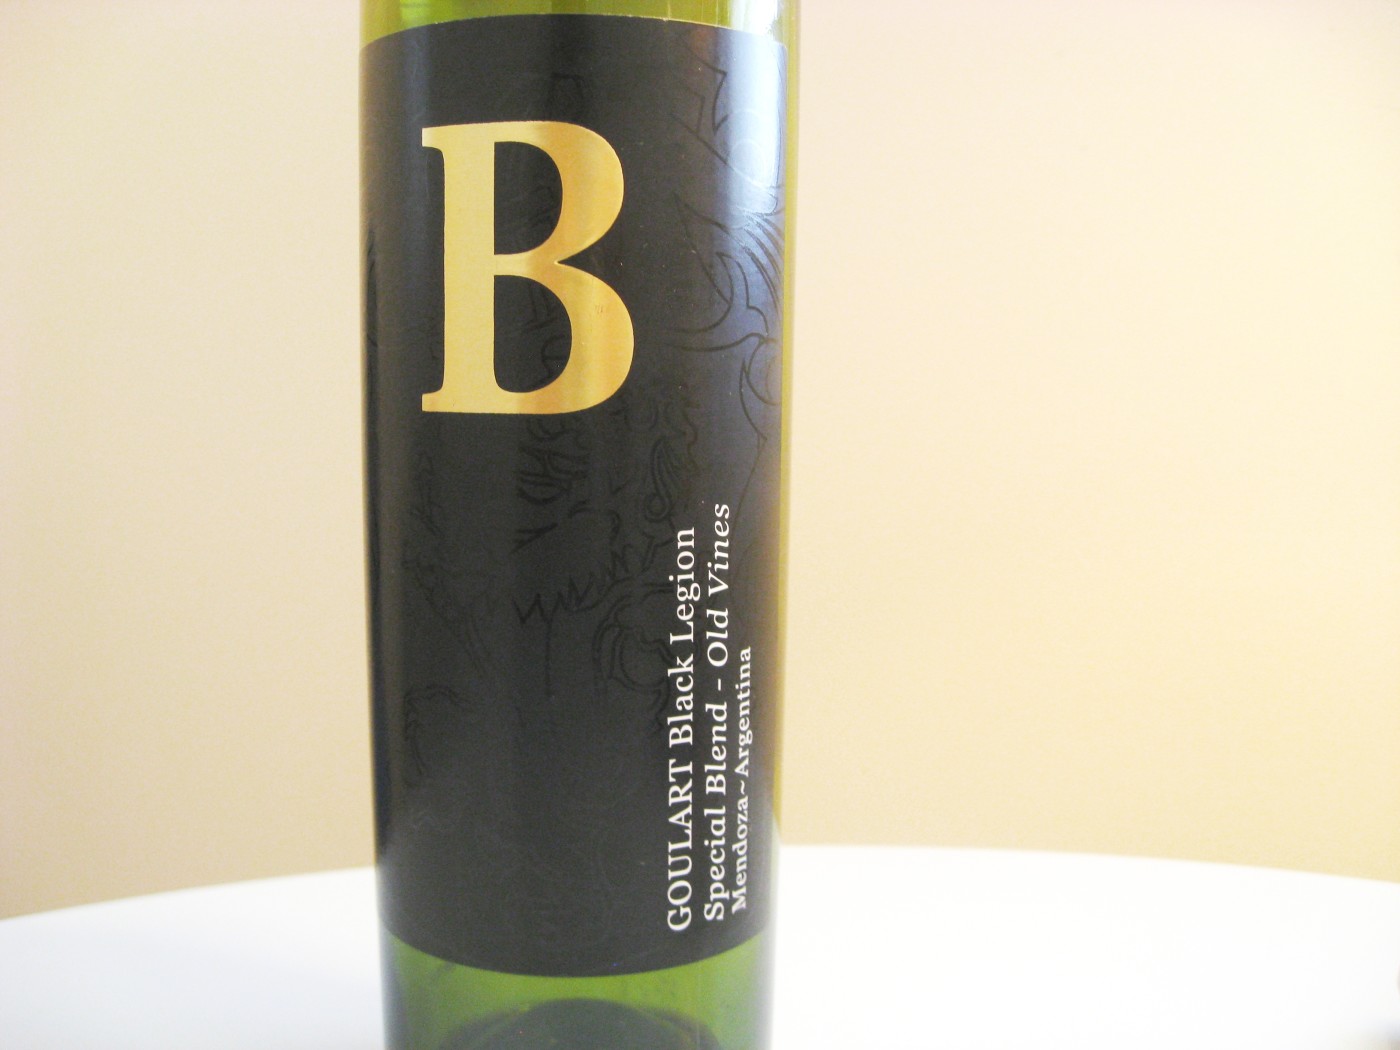 B Goulart Black Legion, Special Blend – Old Vines 2011, Lujan de Cuyo, Mendoza, Argentina, Wine Casual